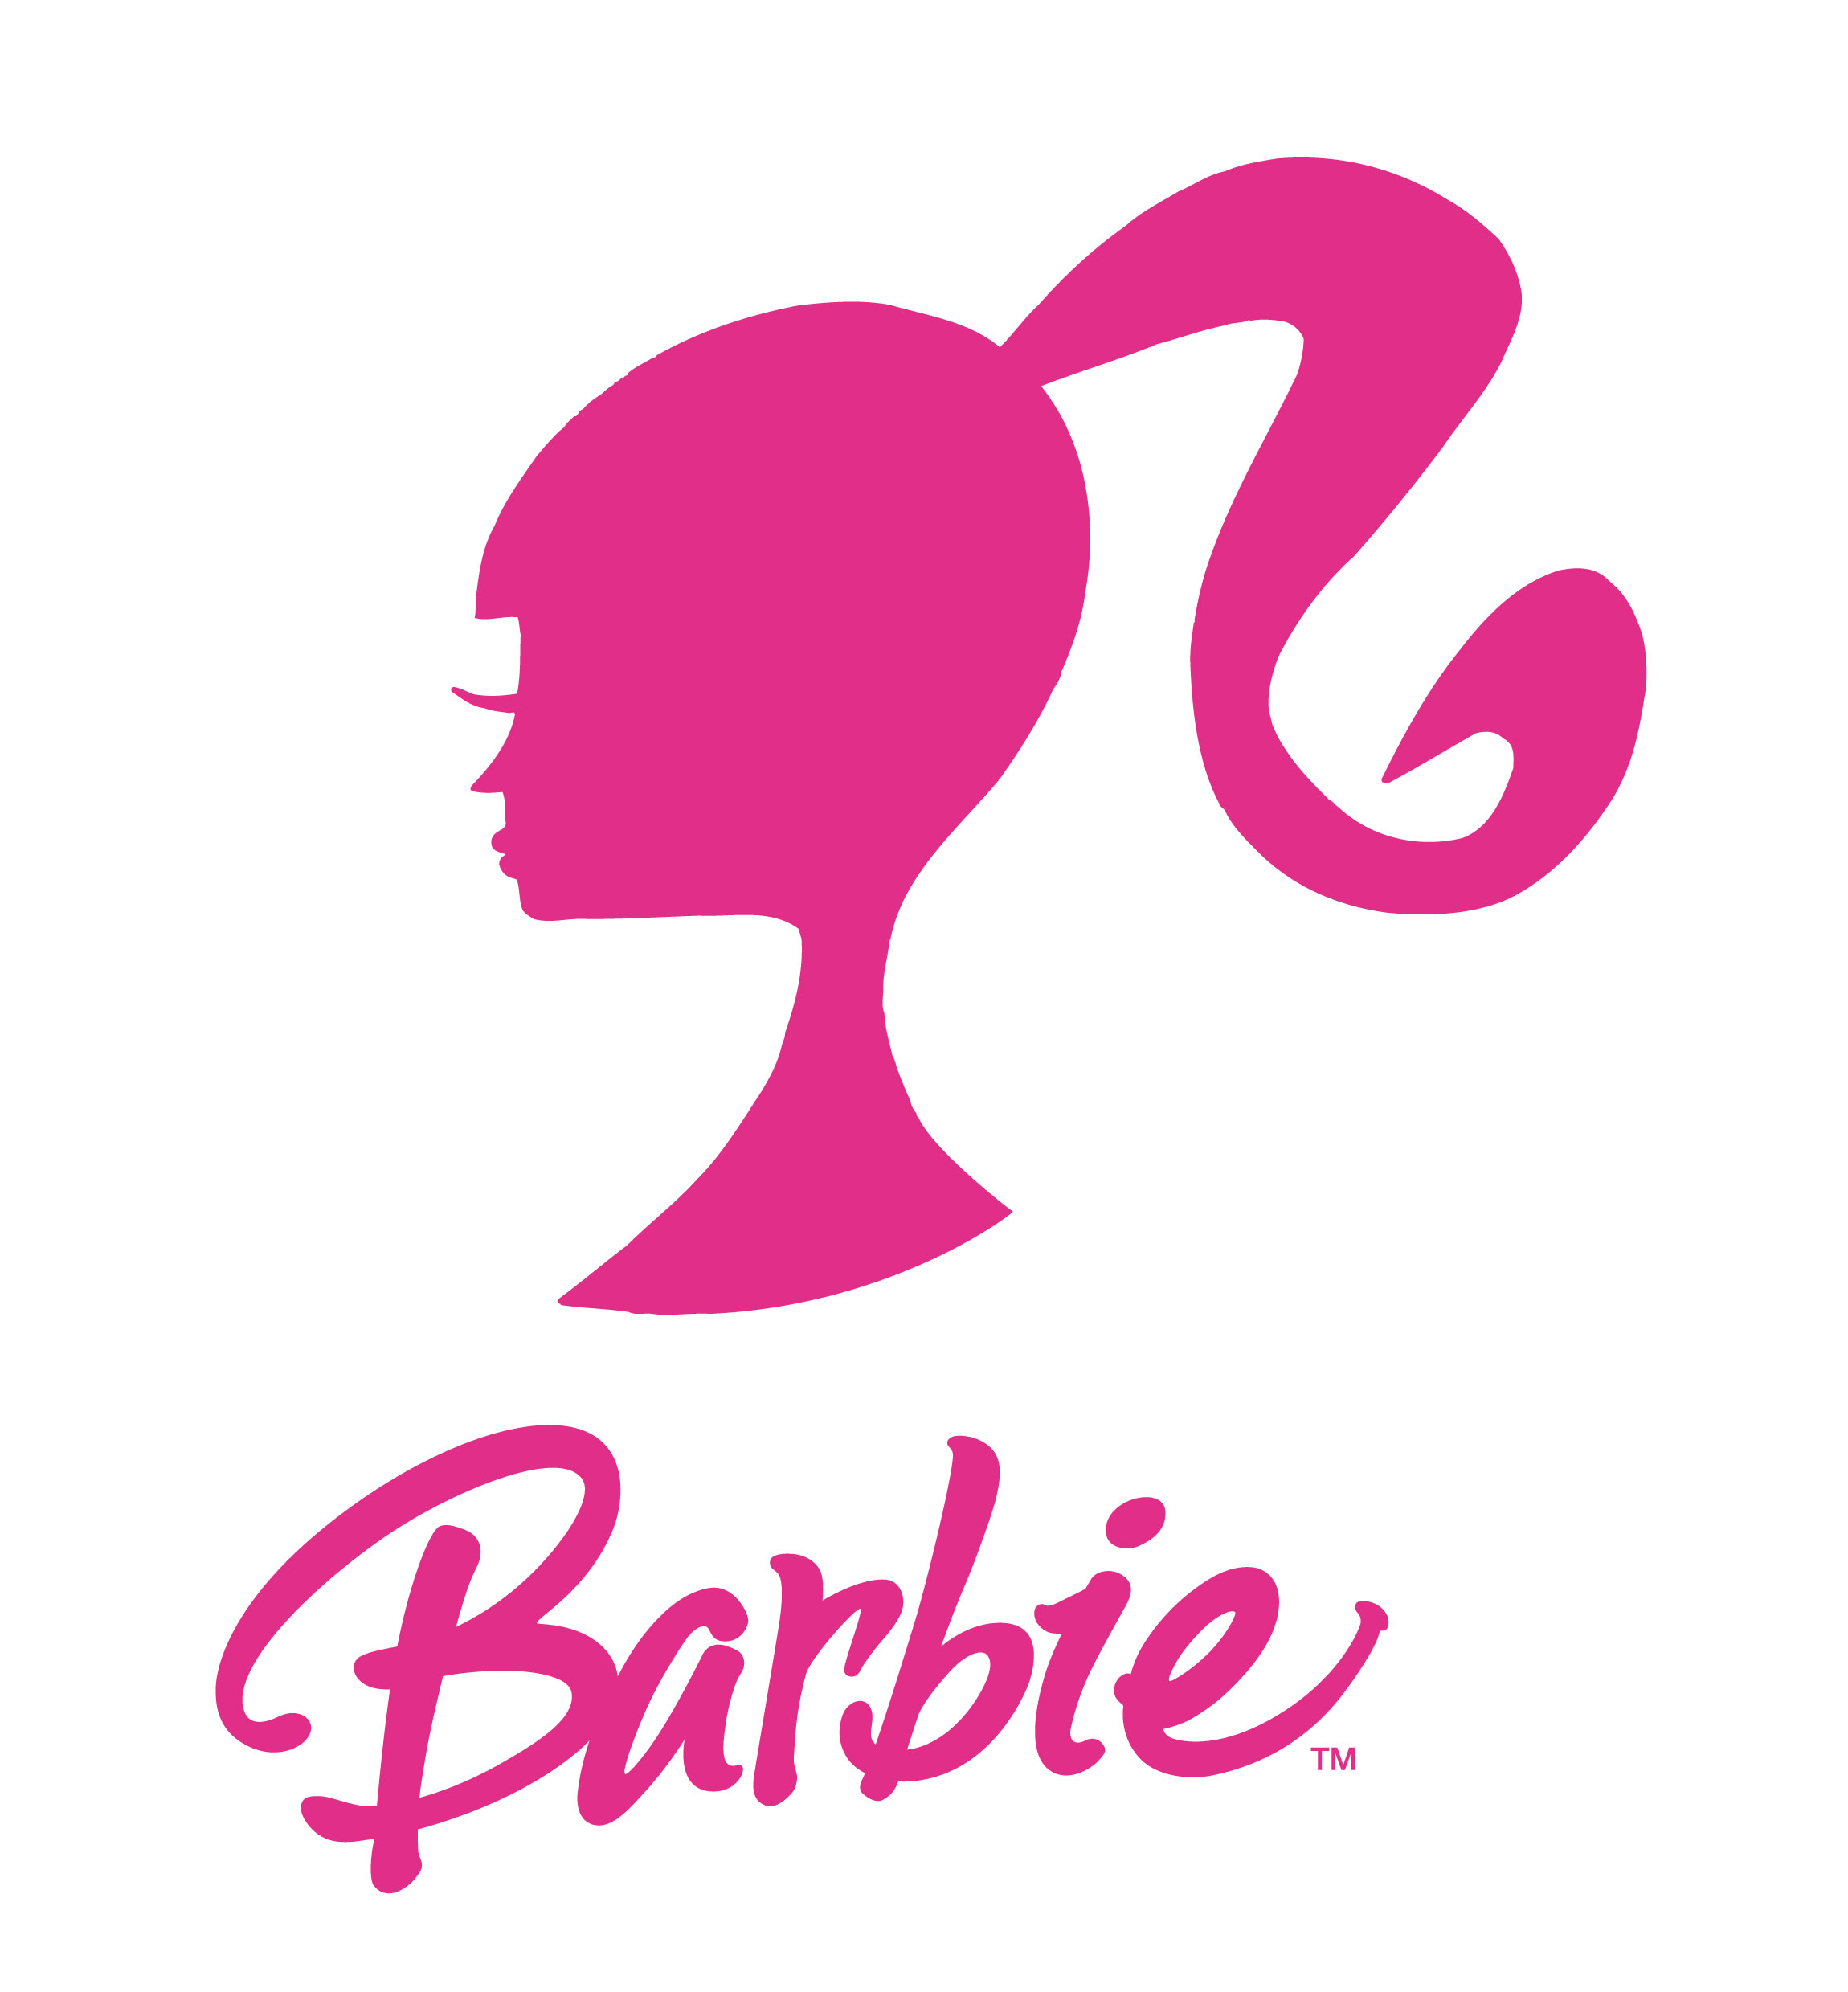 Free download clip art. Barbie clipart logo